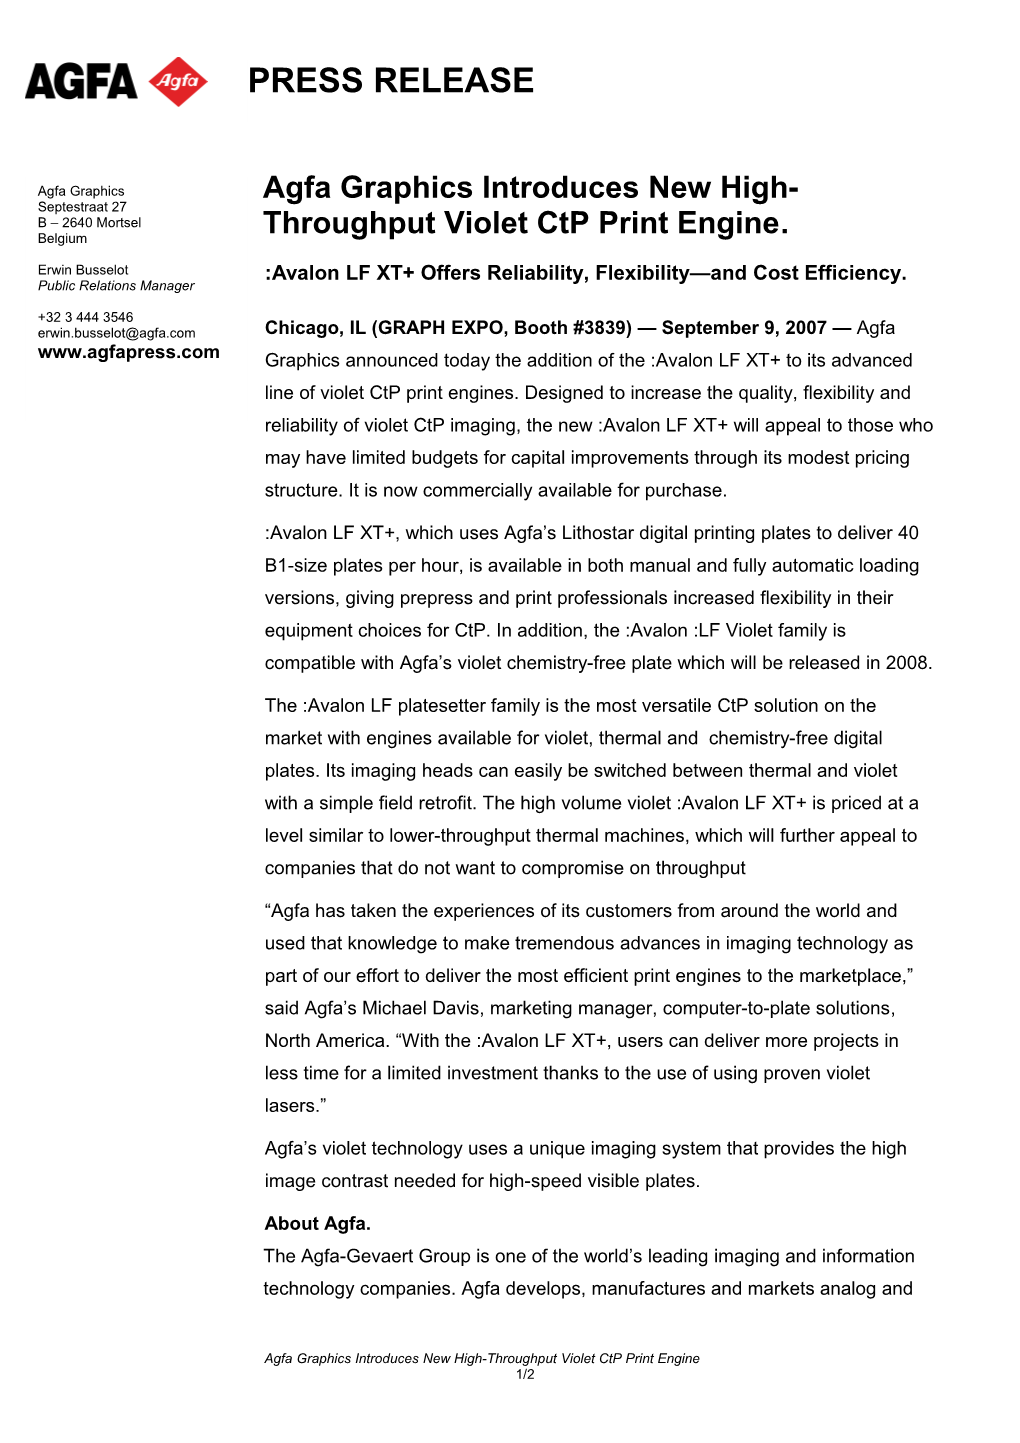 Agfa Graphics Introduces New High-Throughput Violet Ctp Print Engine